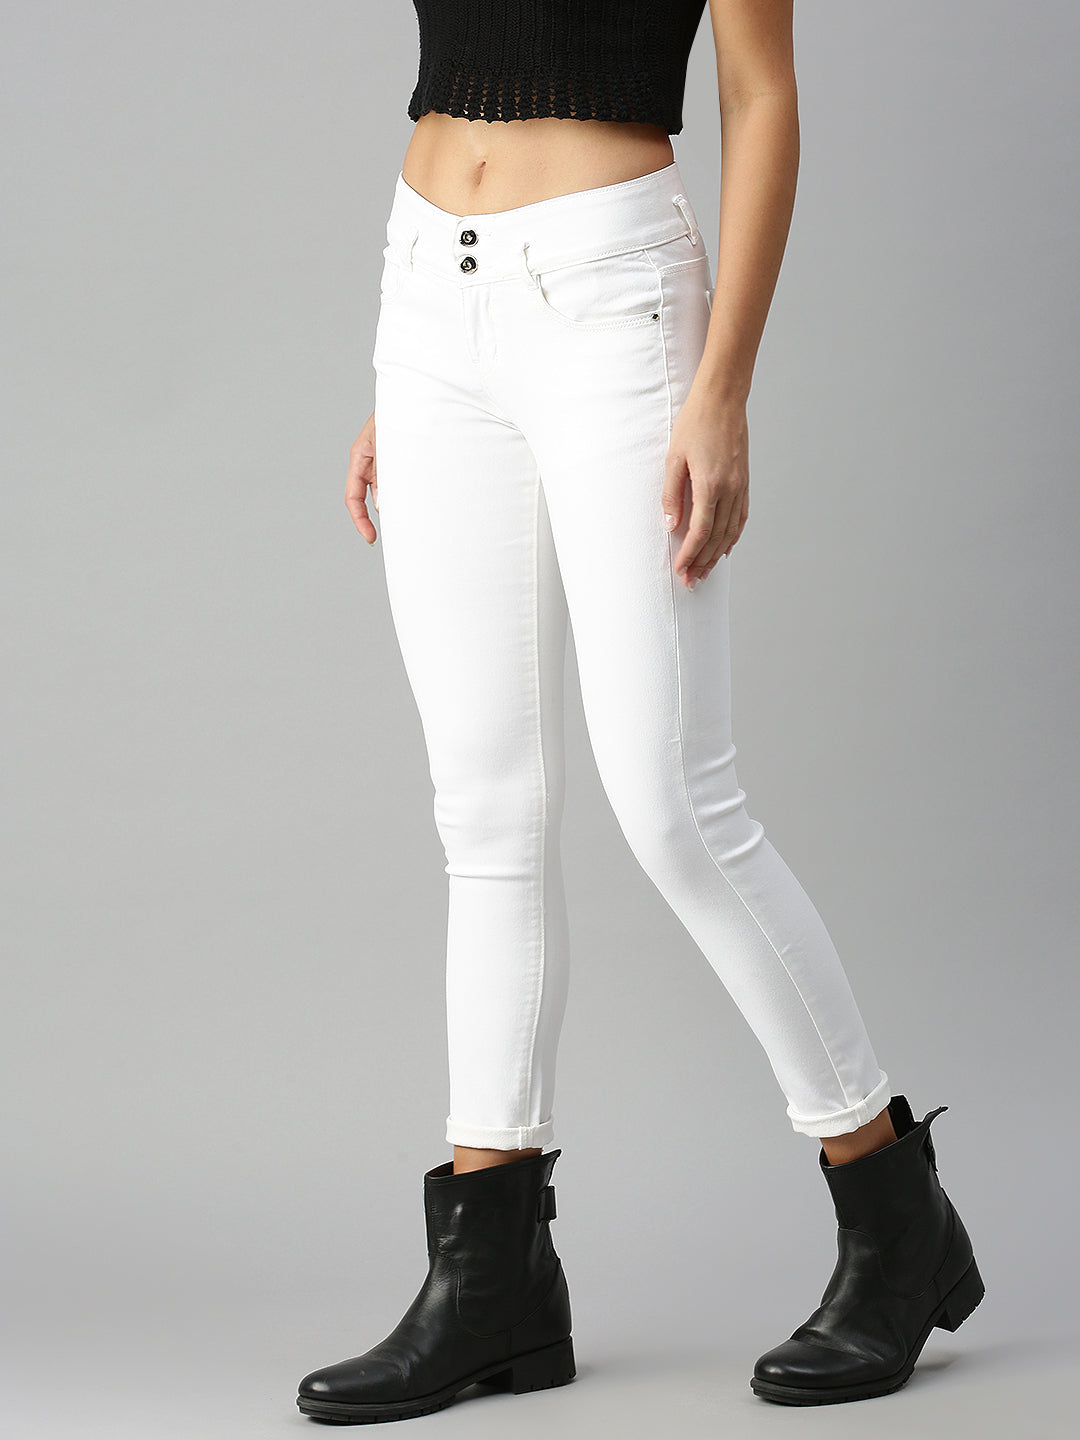 Women's White Solid Denim Skinny Jeans